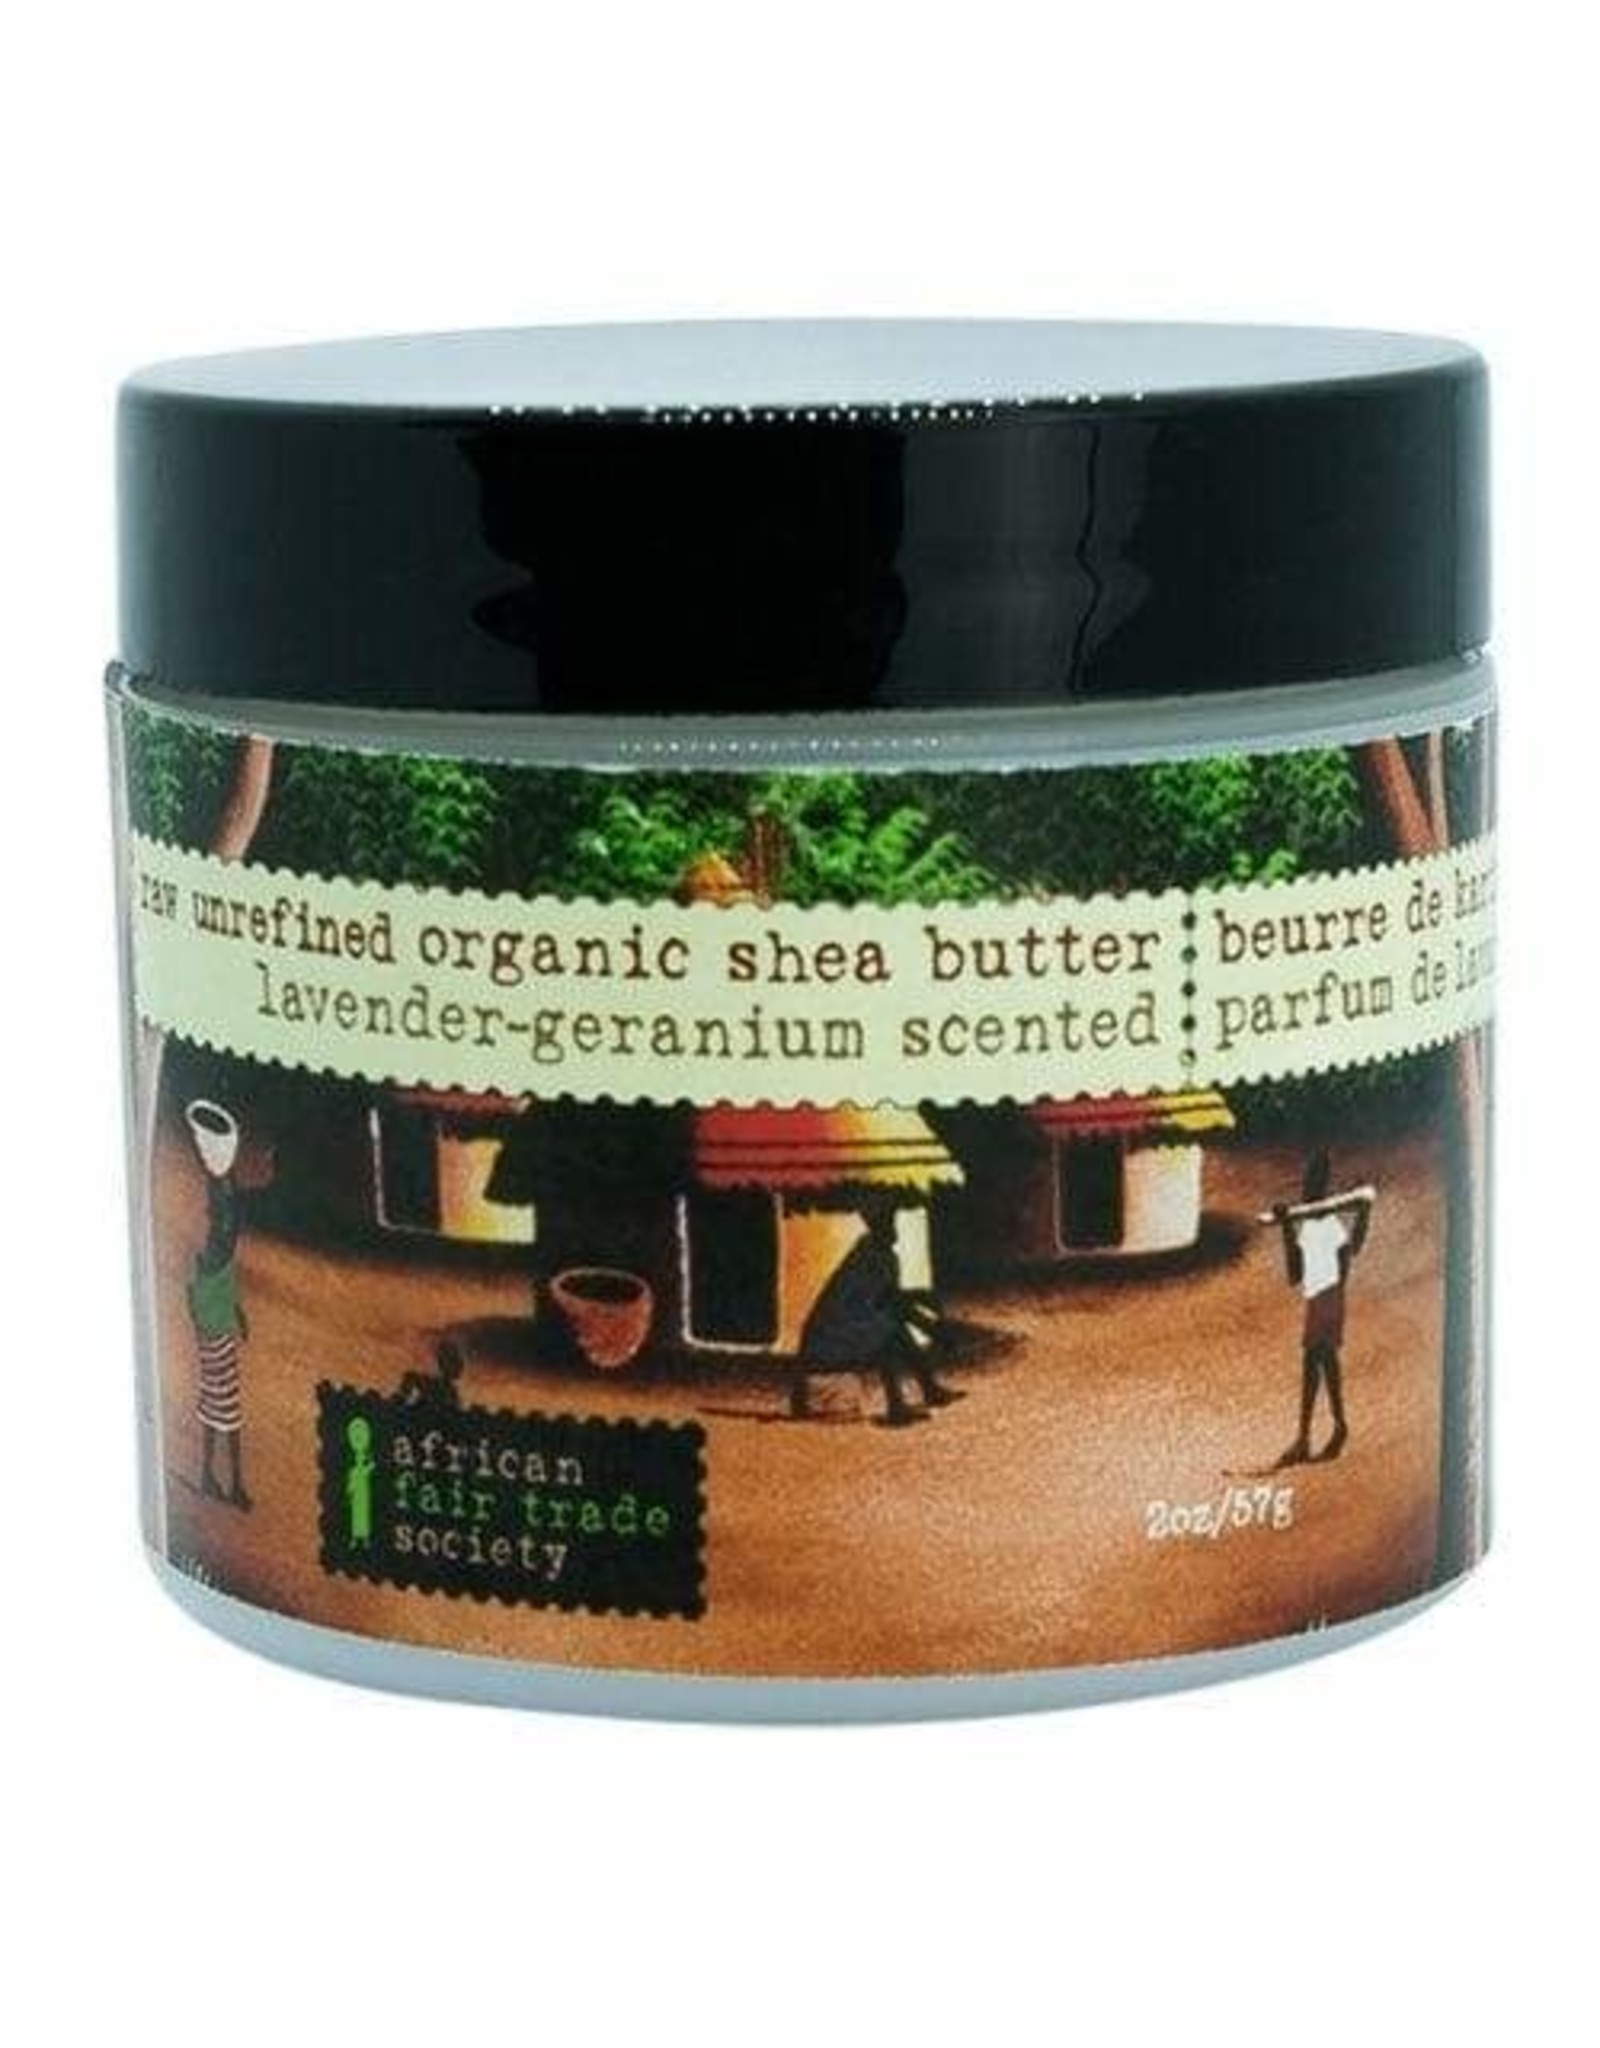 African Fair Trade Society AFTS Shea Butter - Lavender-Geranium, 57g